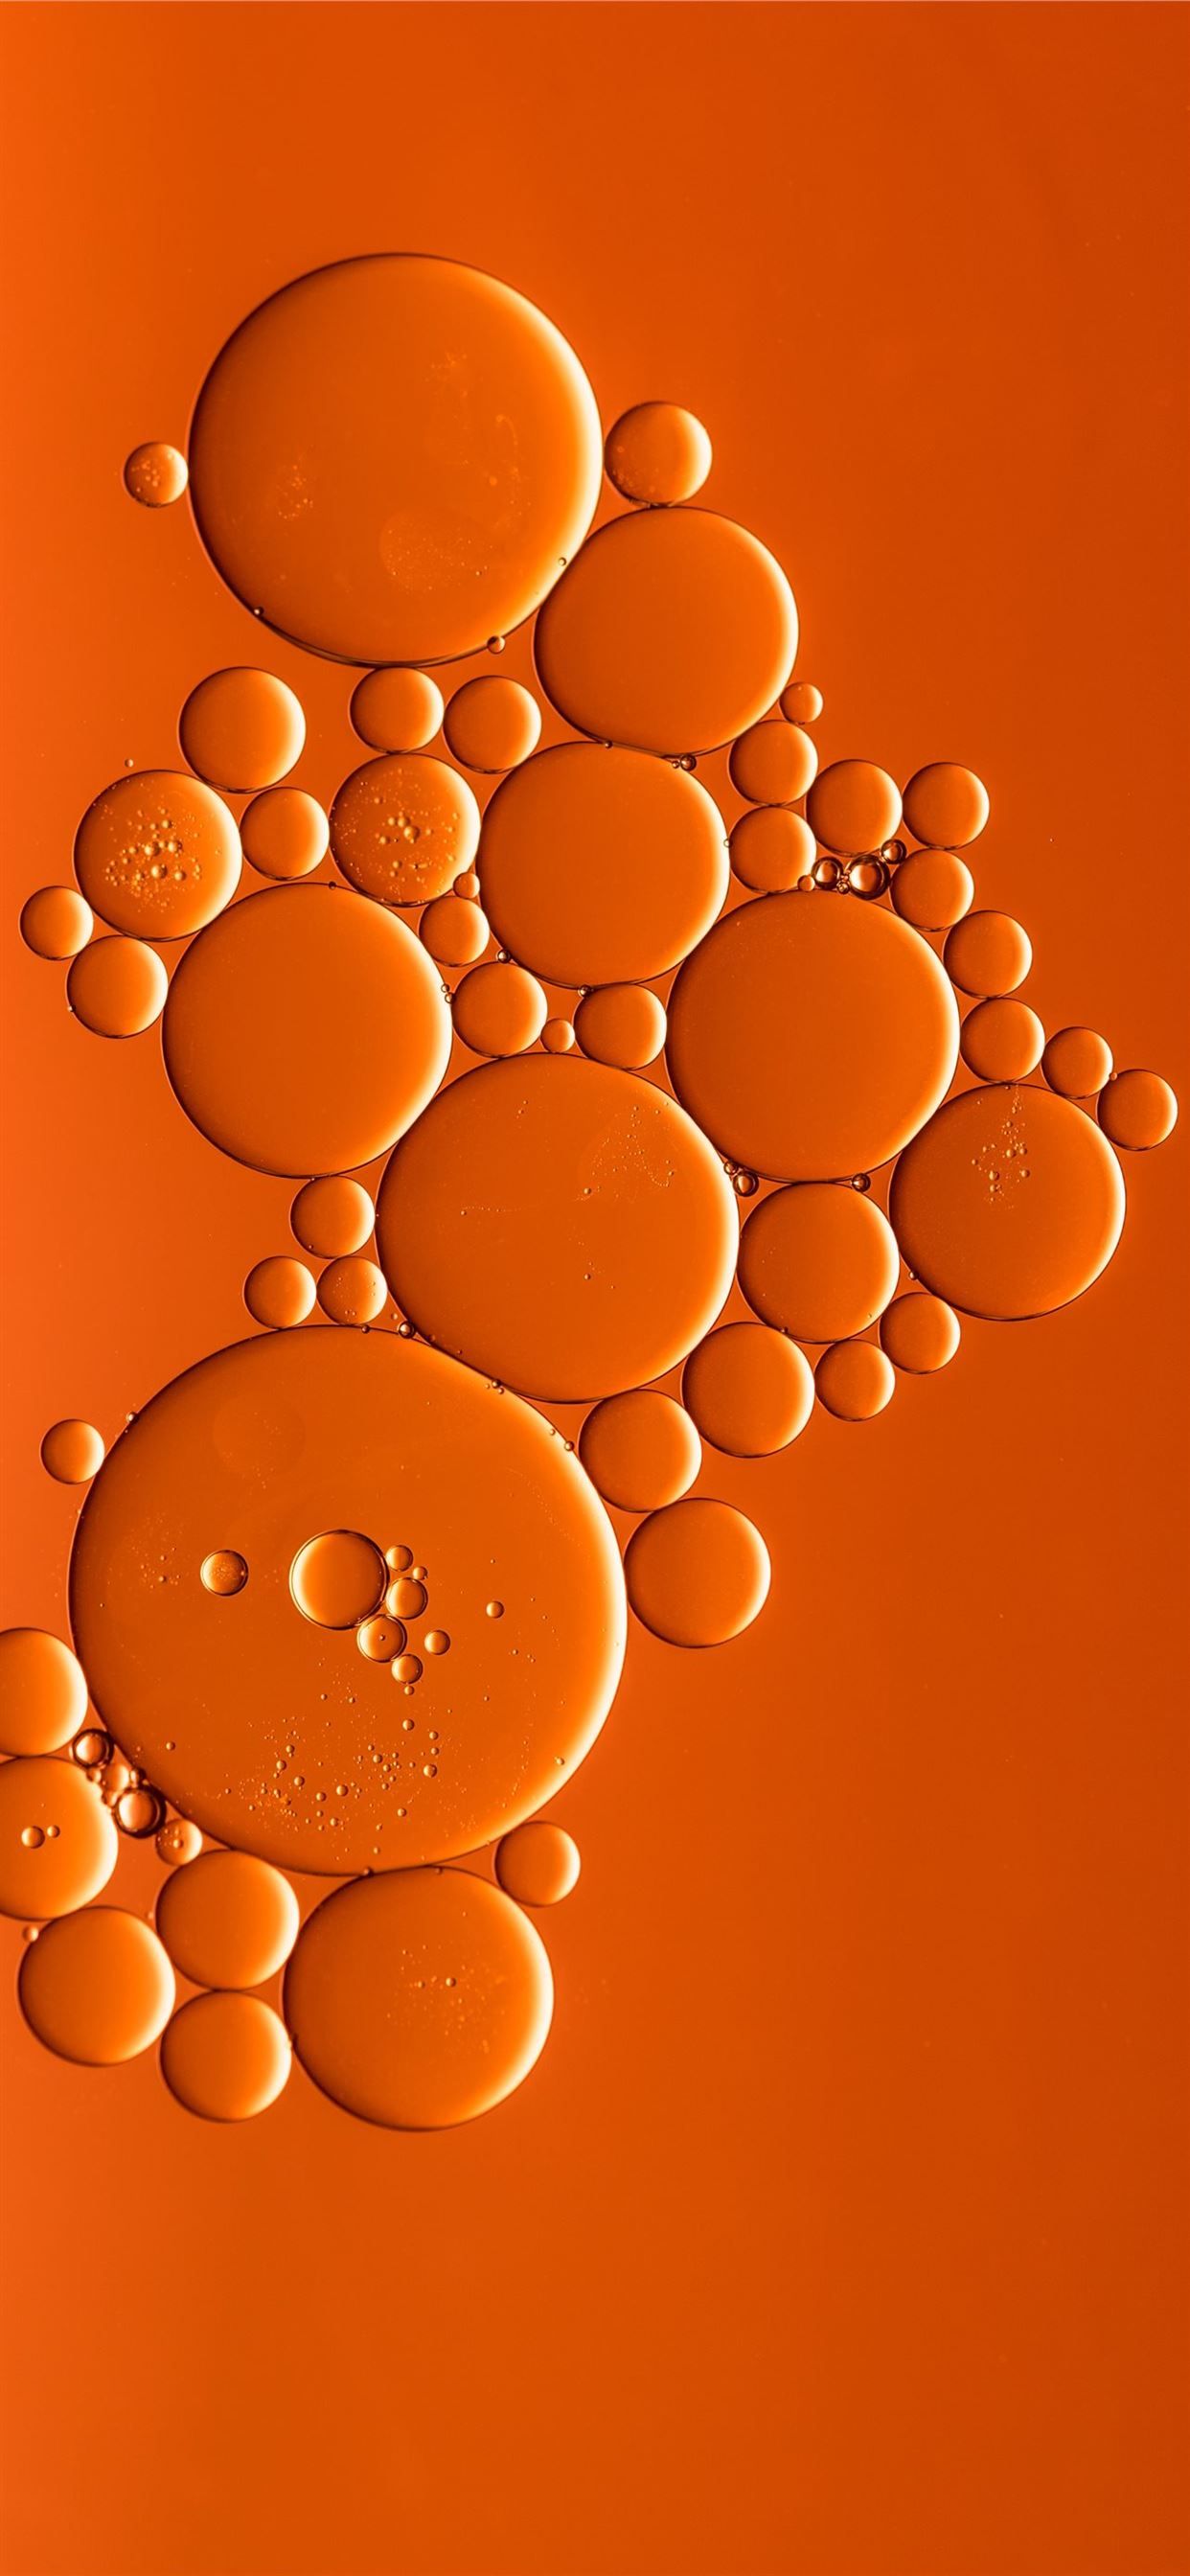 orange bubbles art iPhone X Wallpaper Free Download